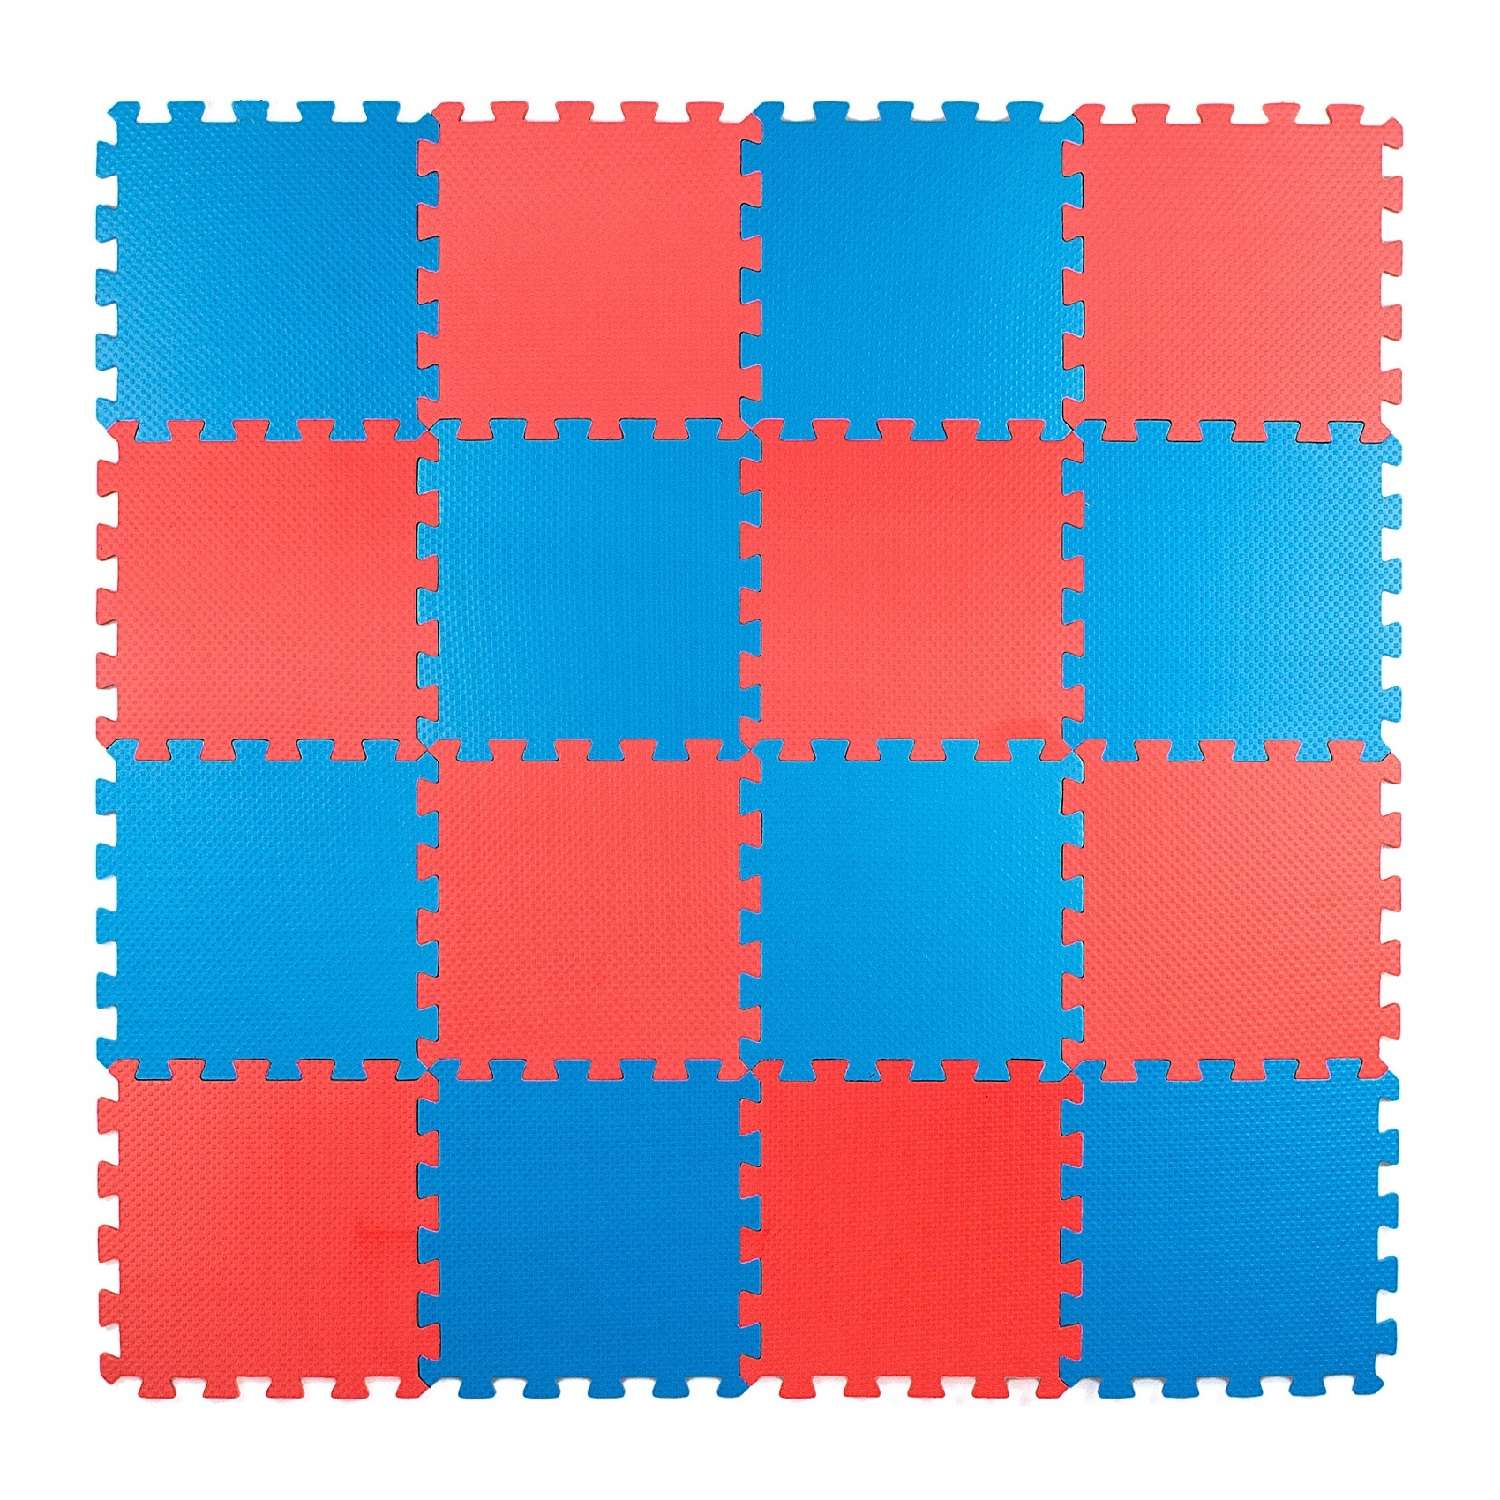 Развивающий детский коврик Eco cover мягкий пол для ползания красно-синий 25х25 - фото 1